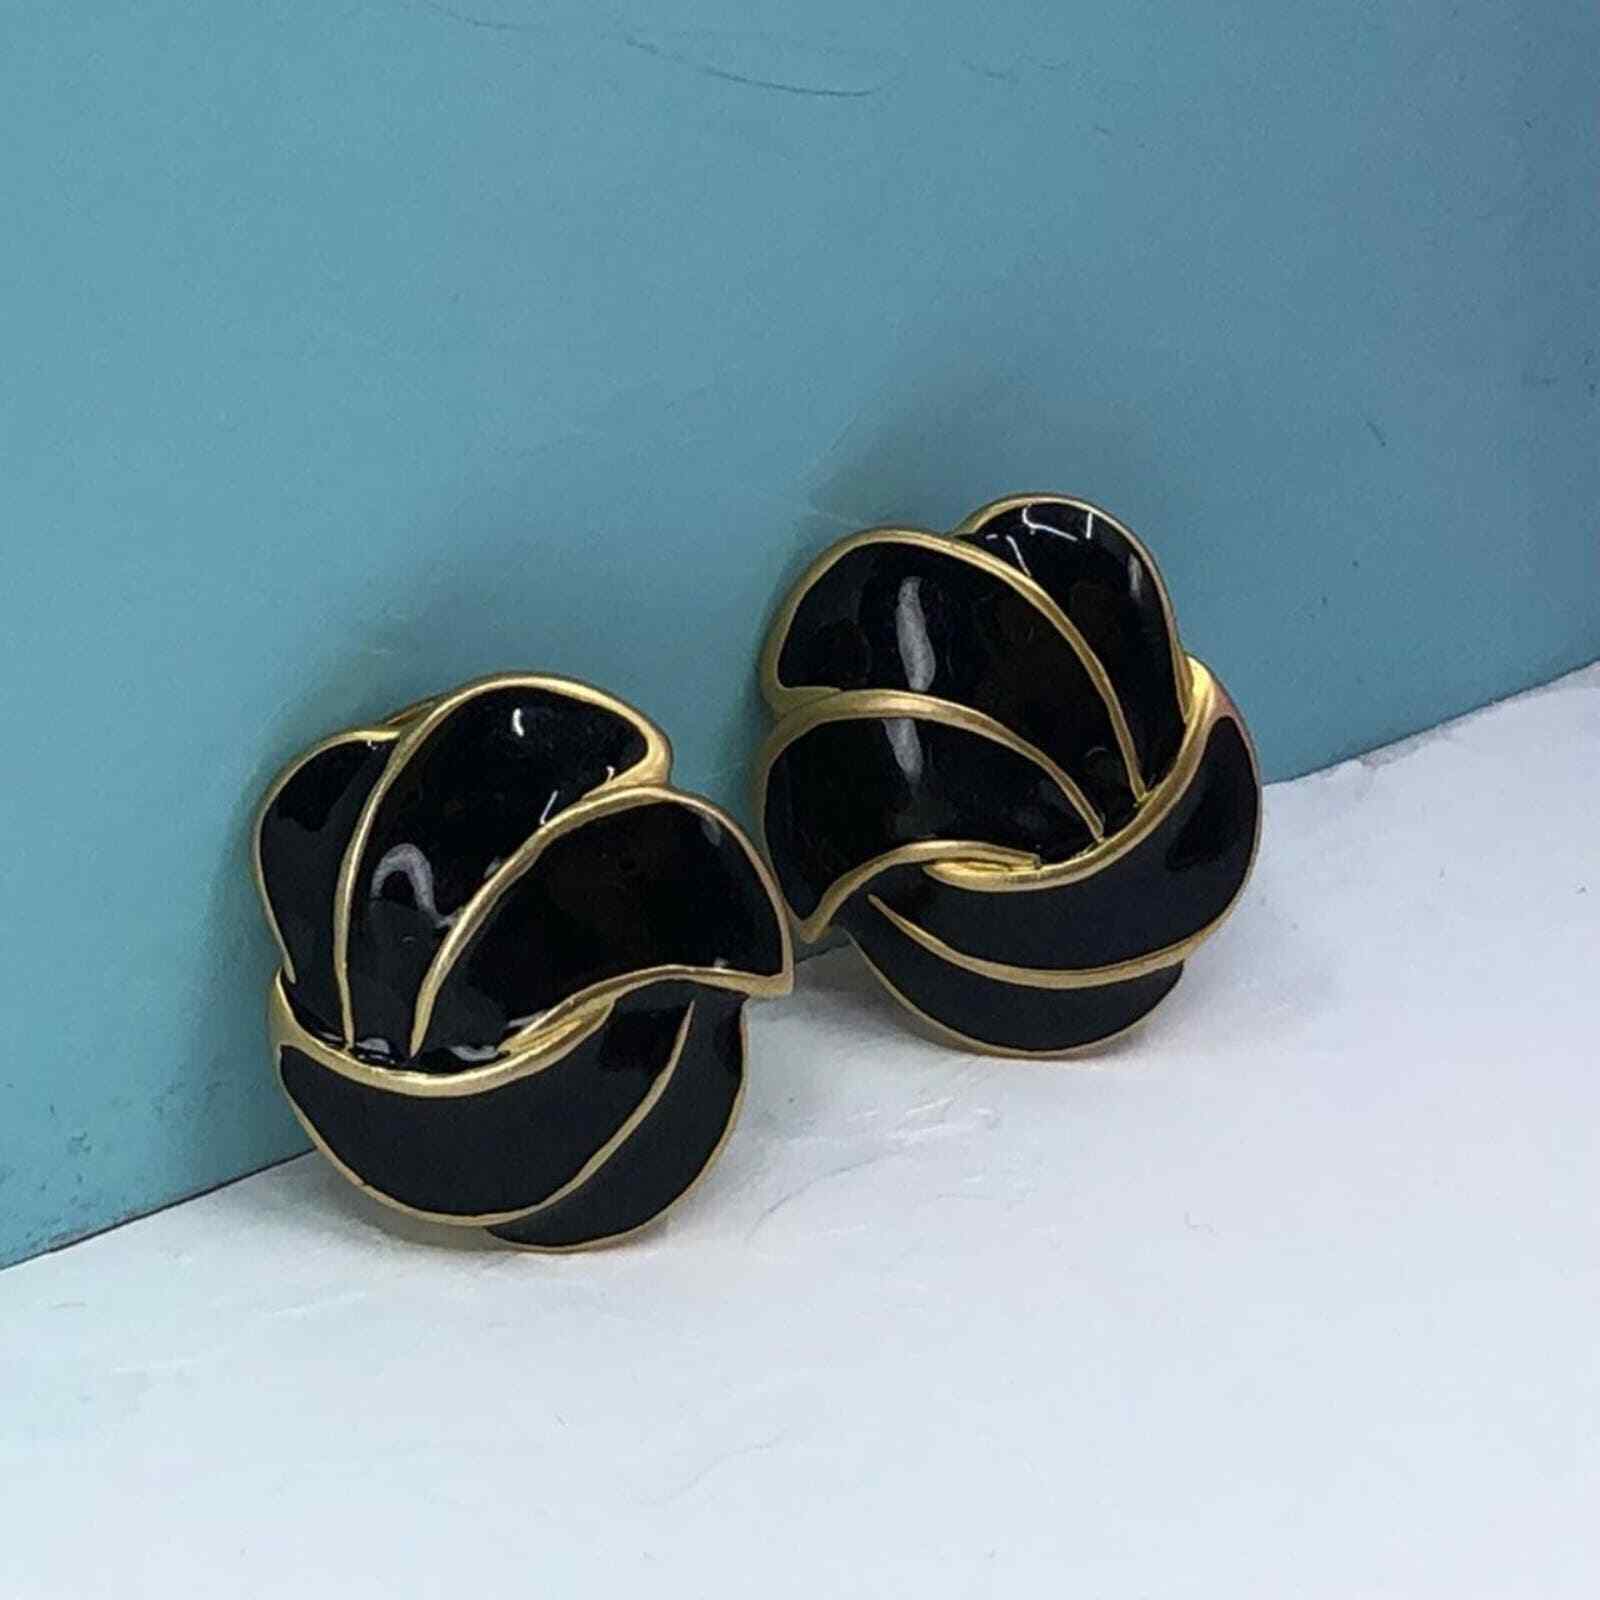 Vintage / Retro Black Enamel and Gold Metal Clip On Earrings - Woven Shape